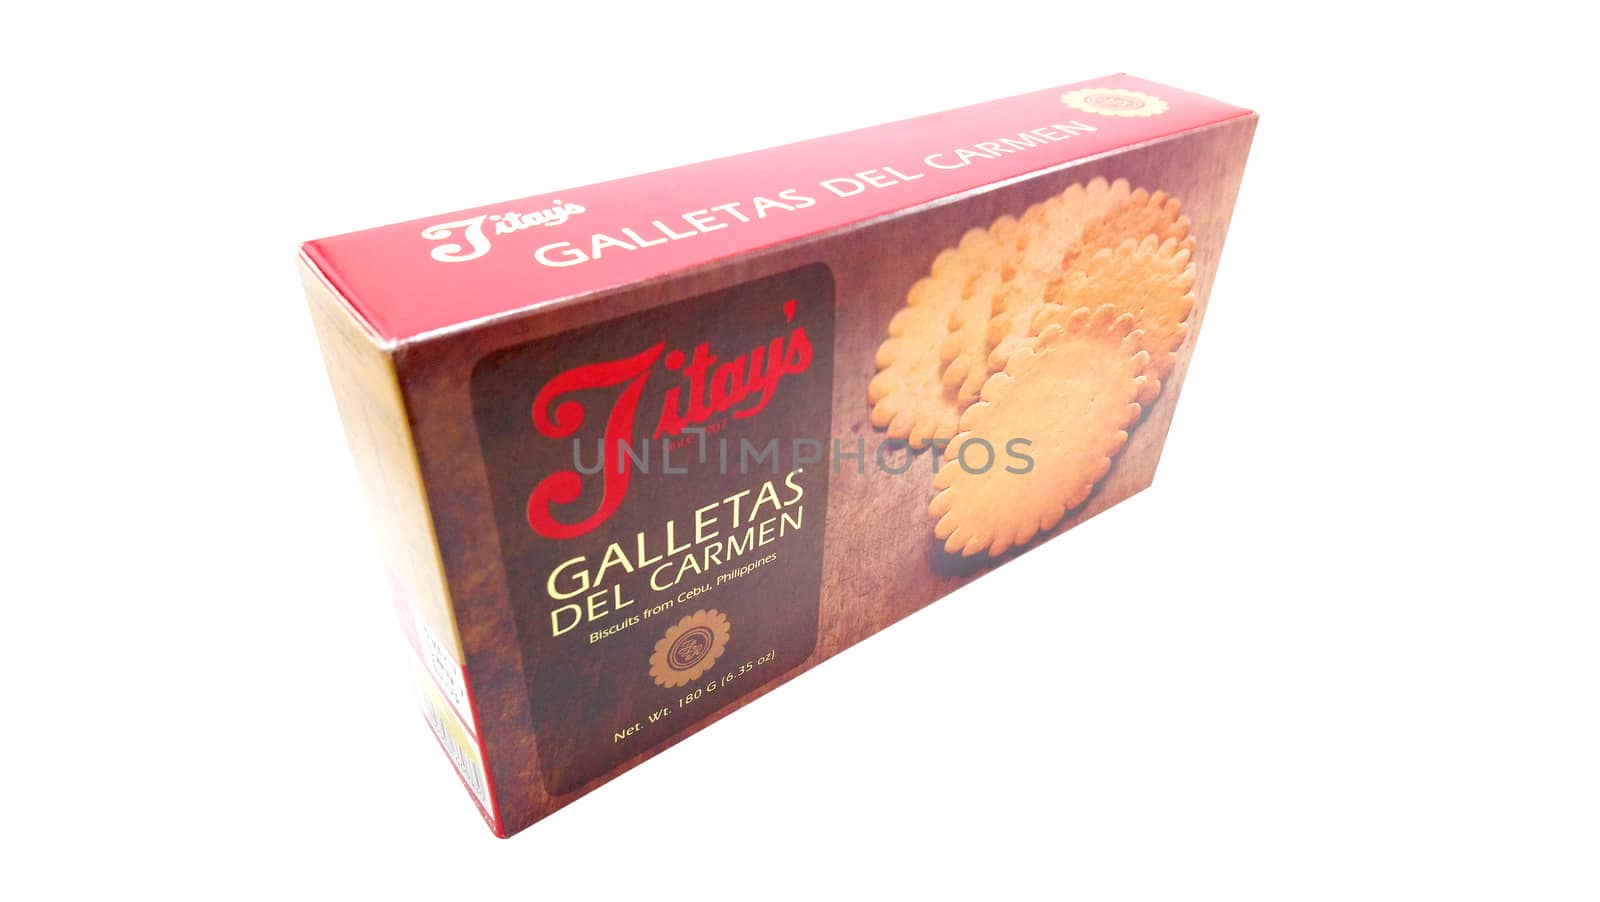 Titays galletas del carmen biscuits in Manila, Philippines by imwaltersy